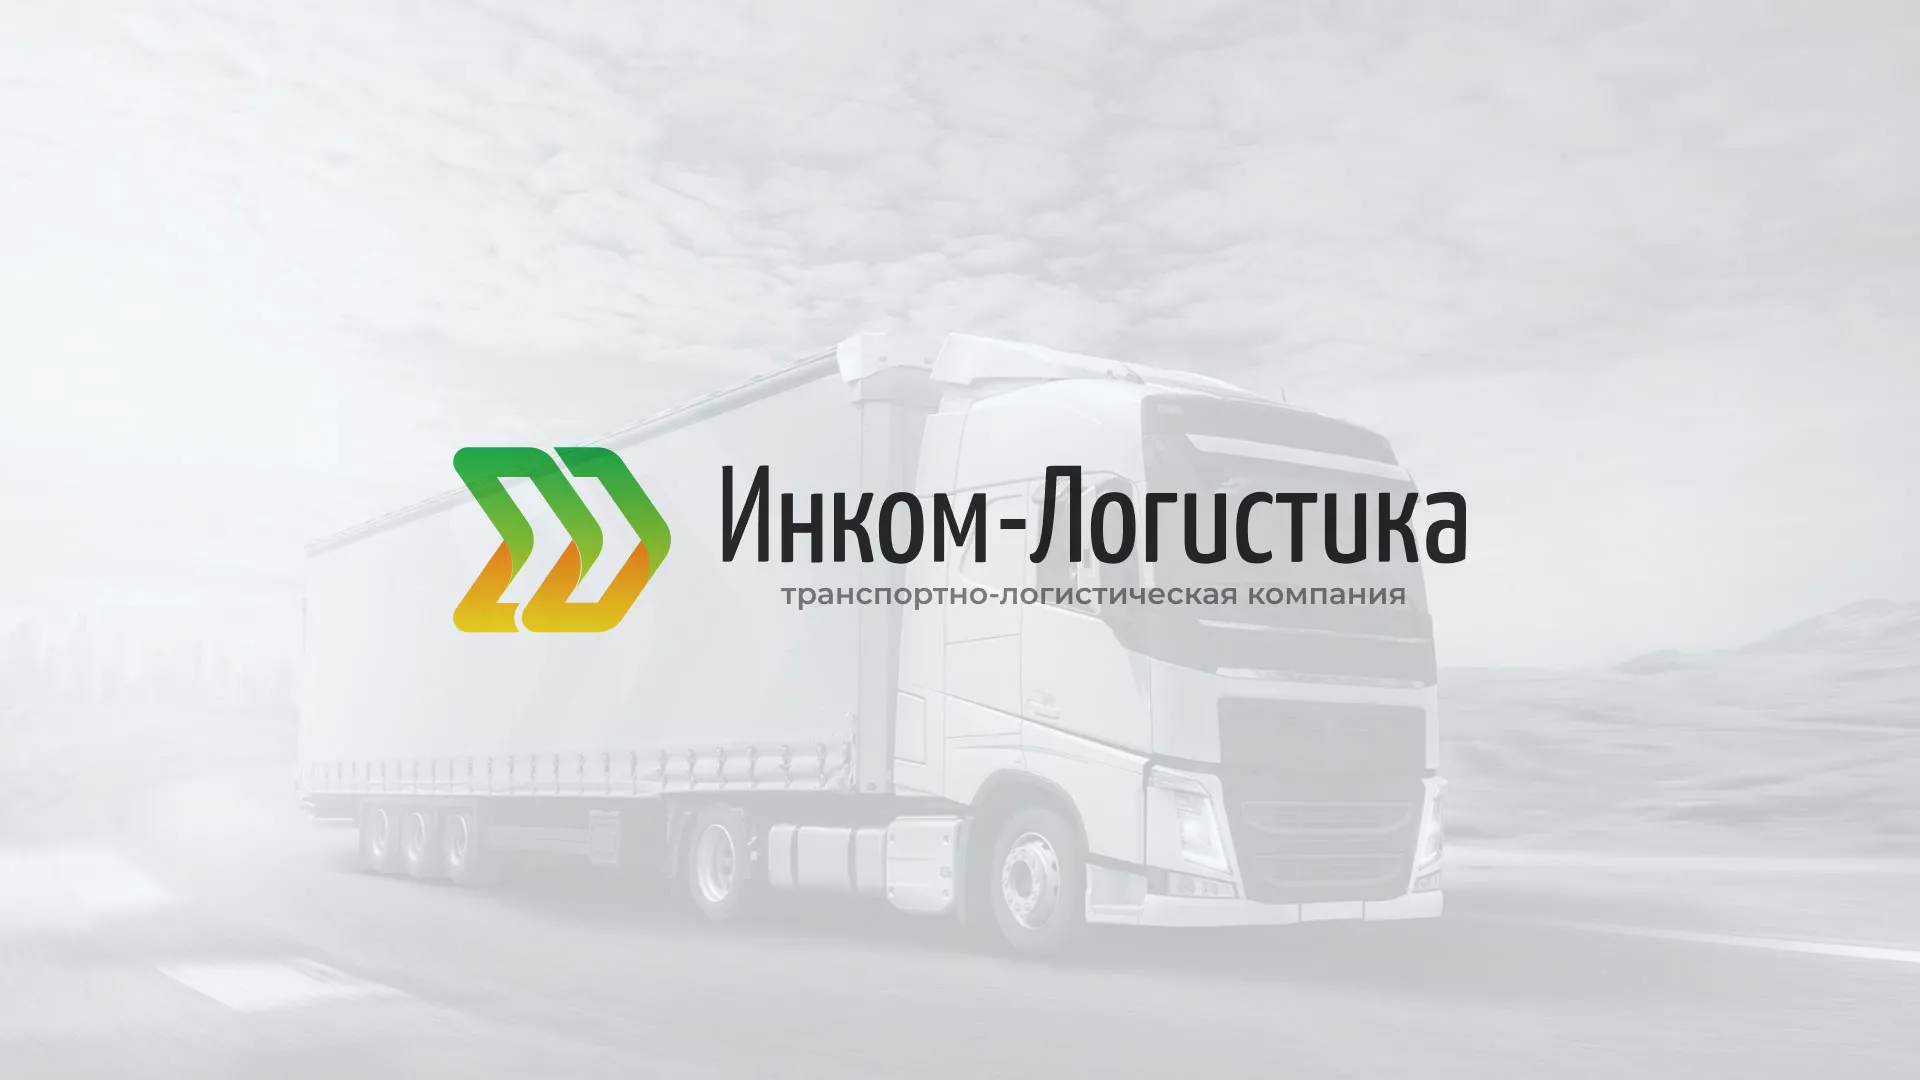 Разработка логотипа и сайта компании «Инком-Логистика» в Кирове